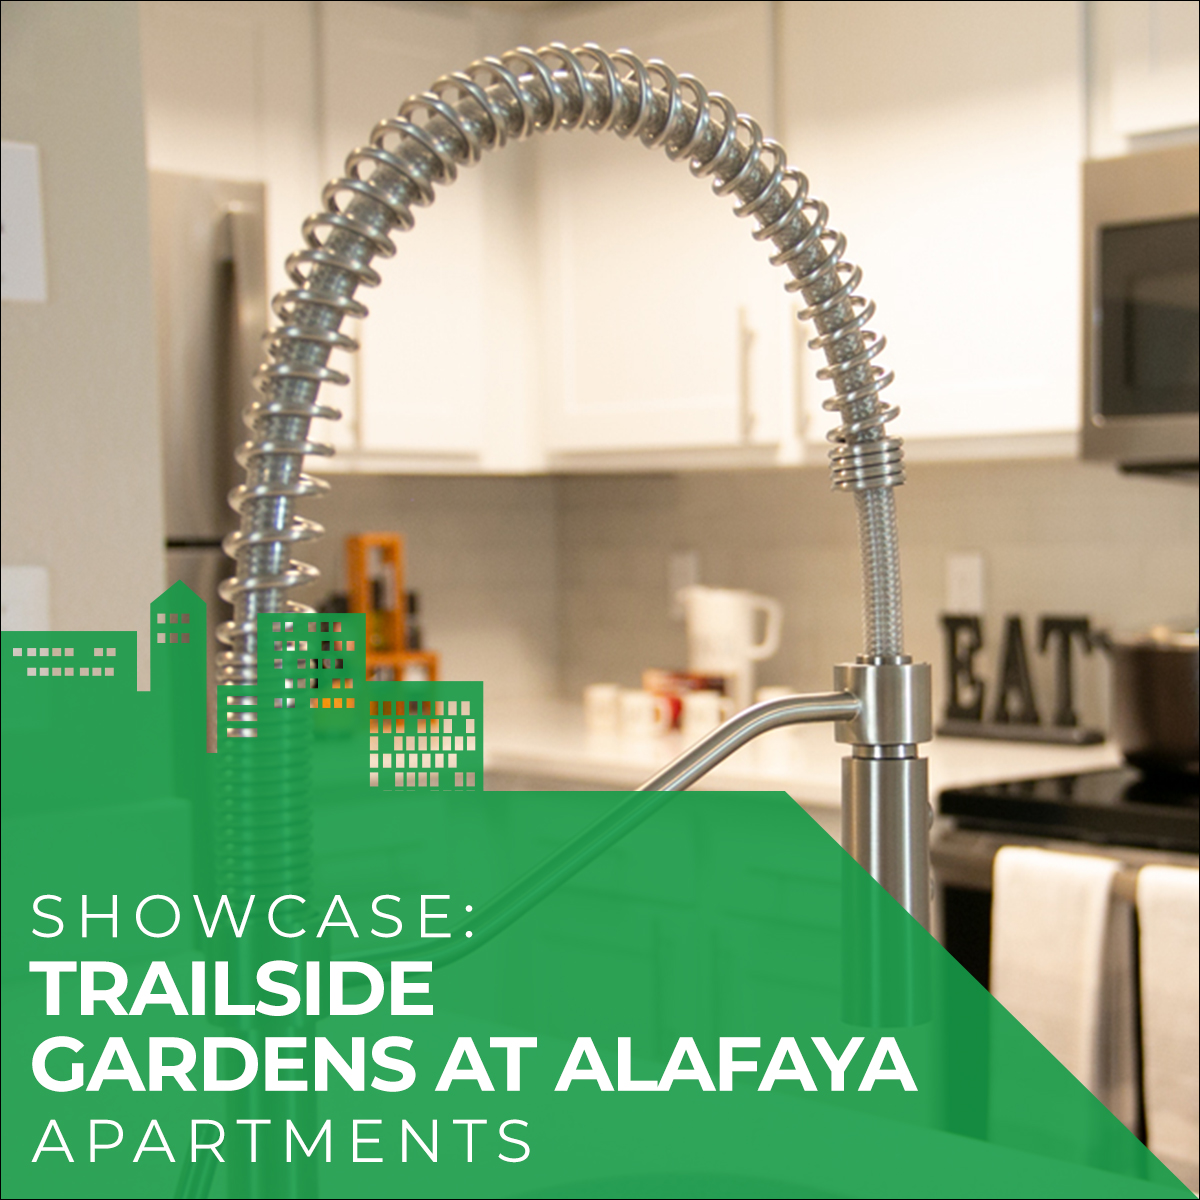 Trailside Gardens at Alafaya Apartments